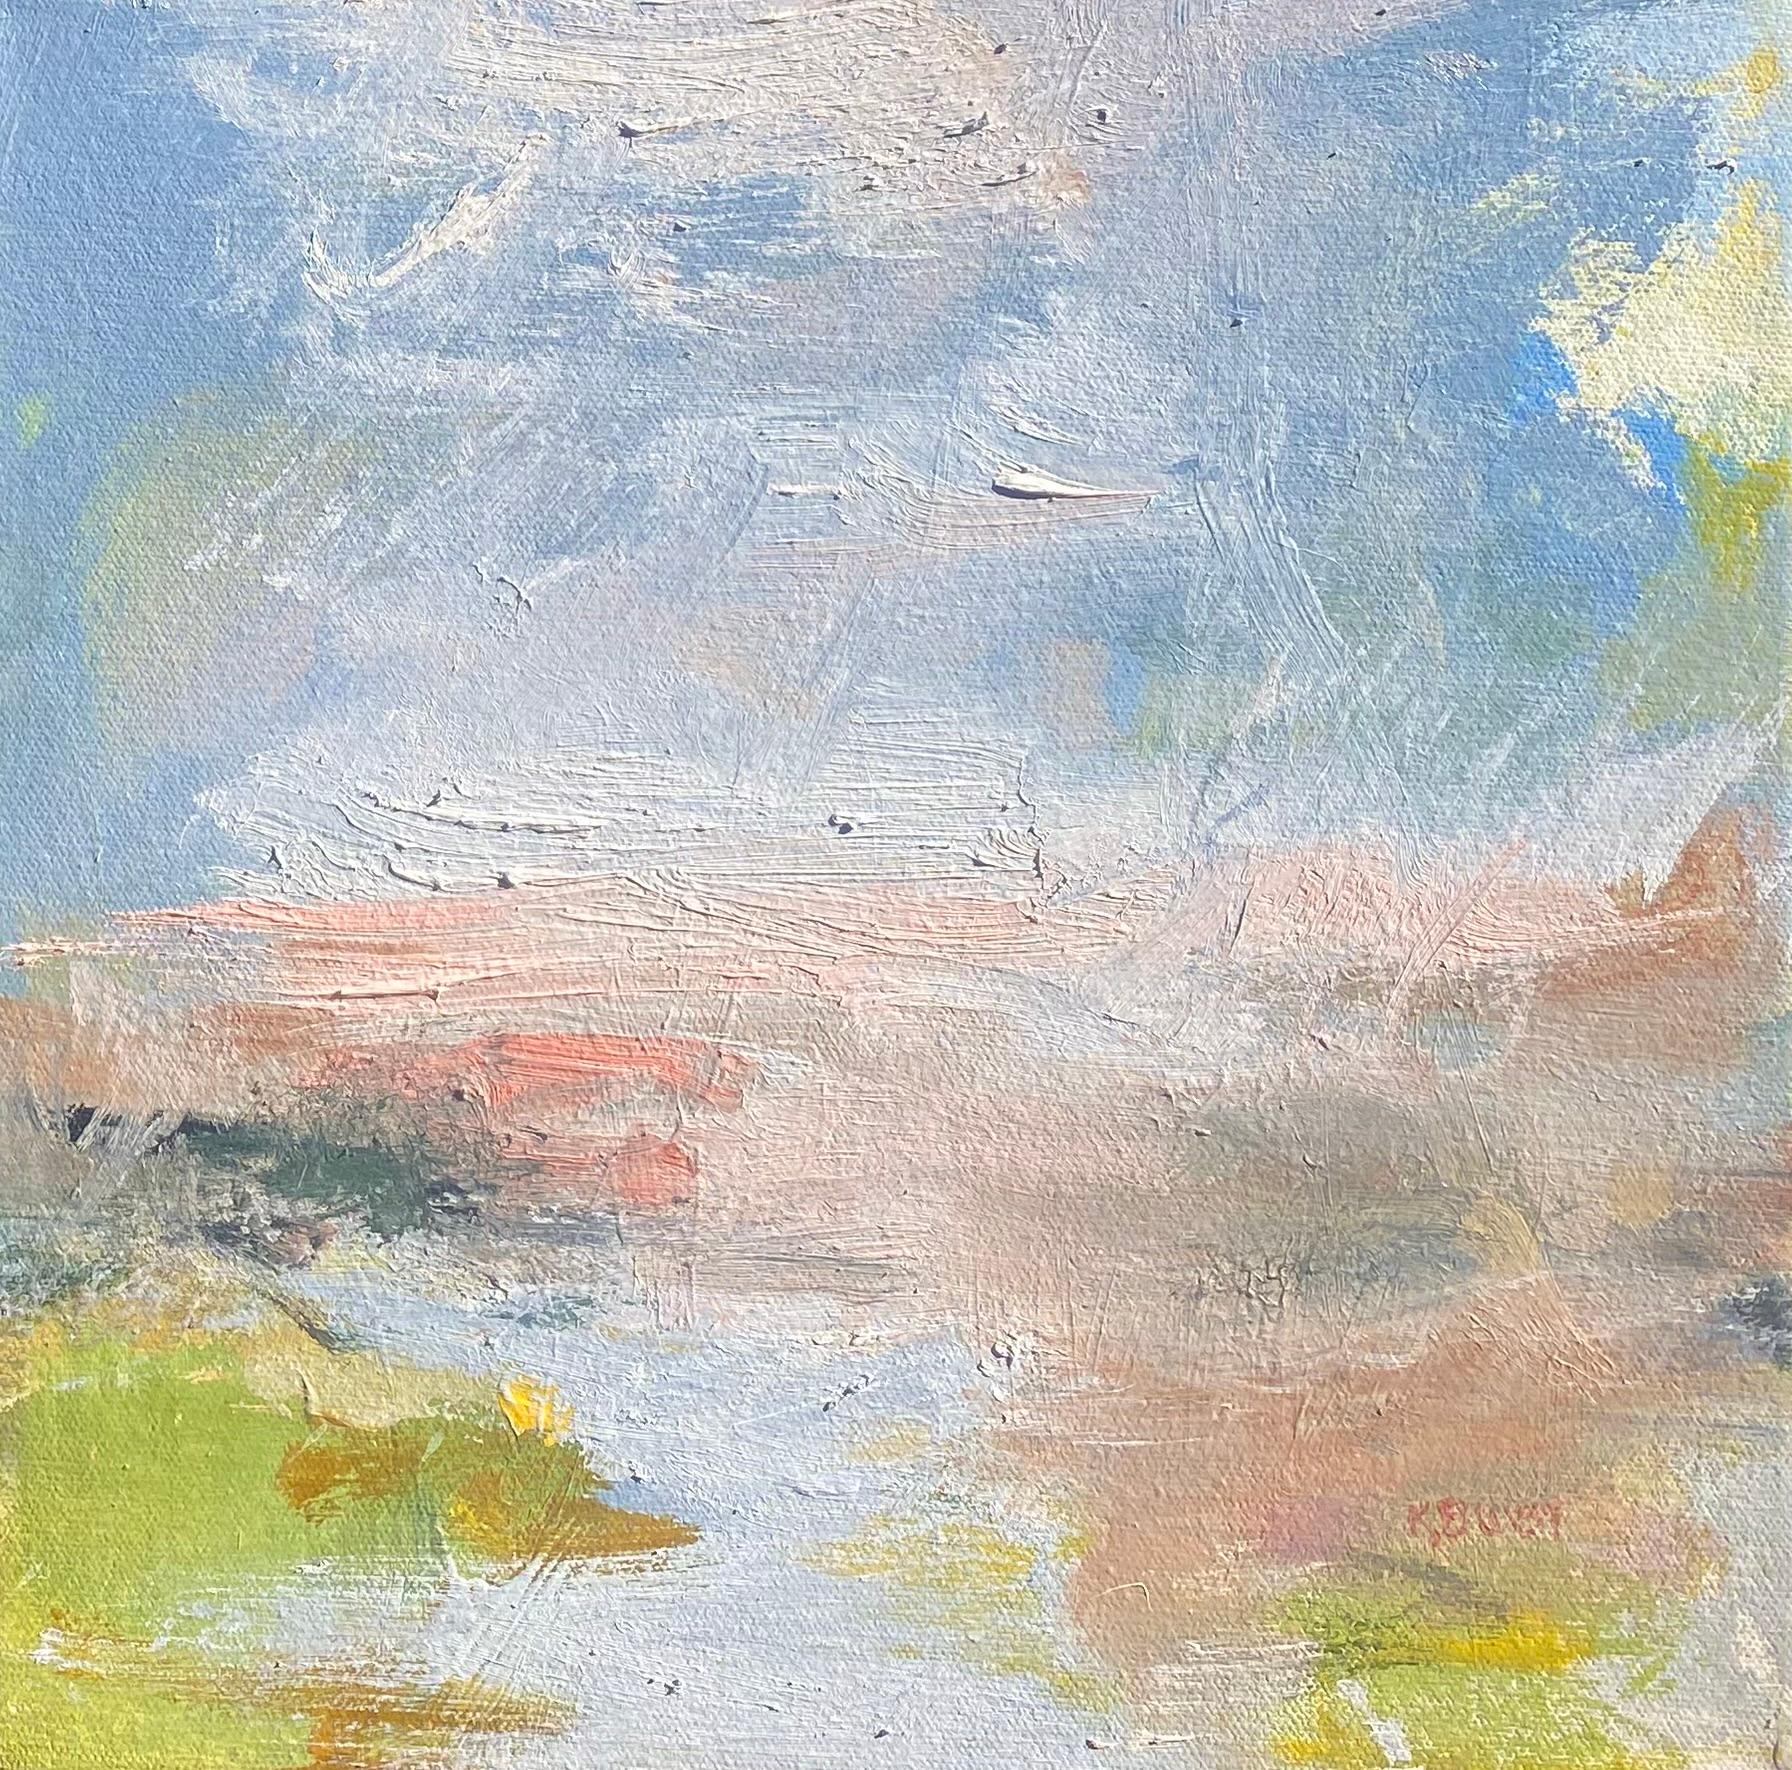 Kathy Buist Landscape Painting - “Moving Mist”